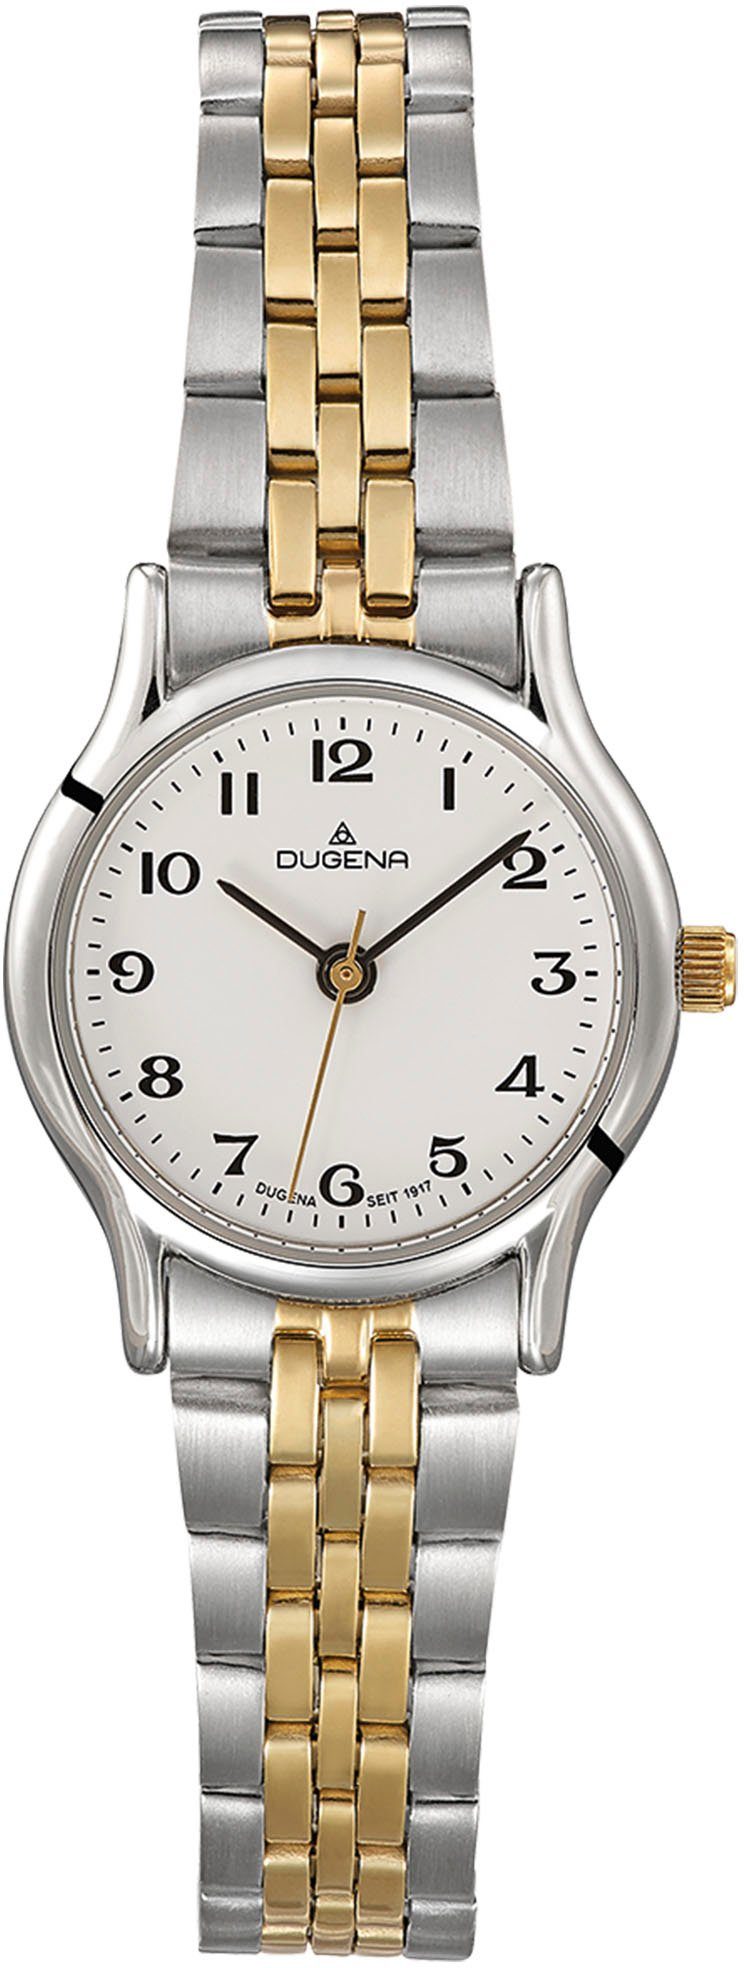 Dugena Quarzuhr Vintage, 4461111, Armbanduhr, Damenuhr